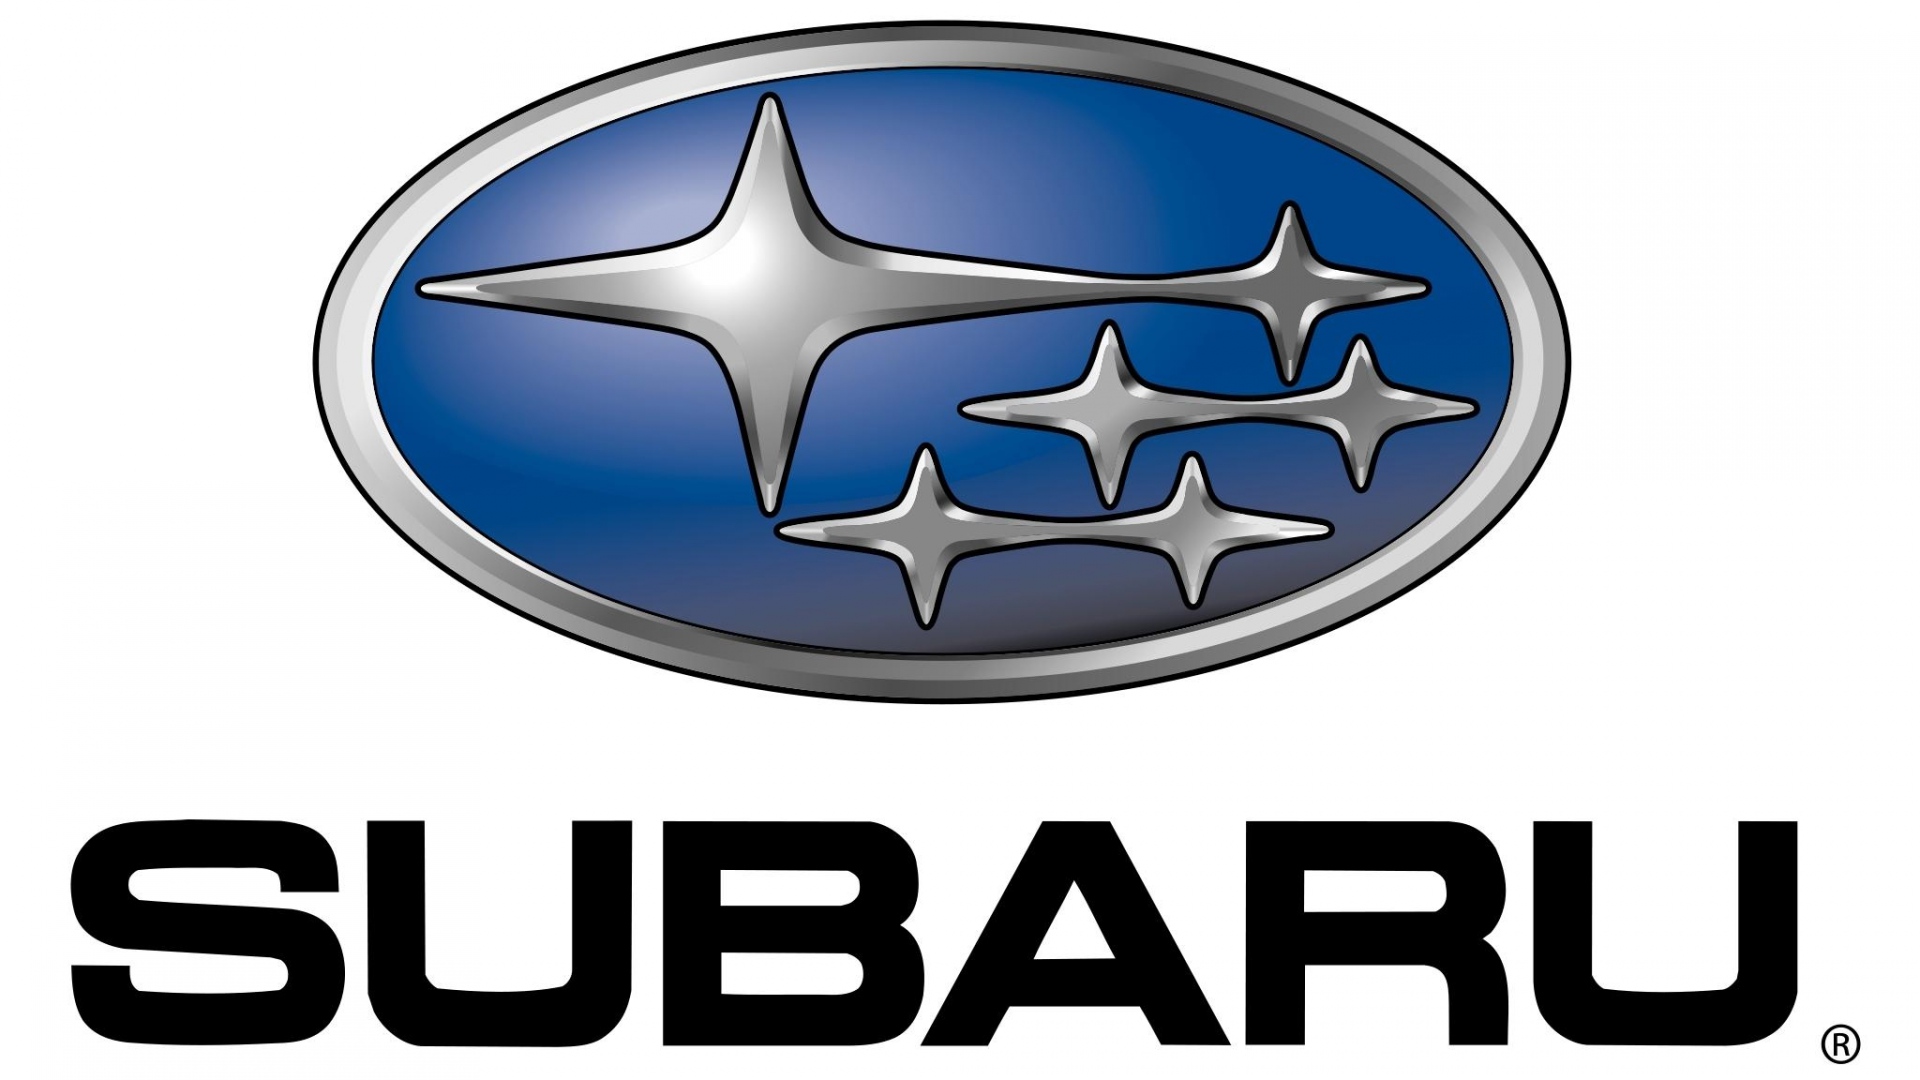 Subaru Car Brand Logo 1920x1080